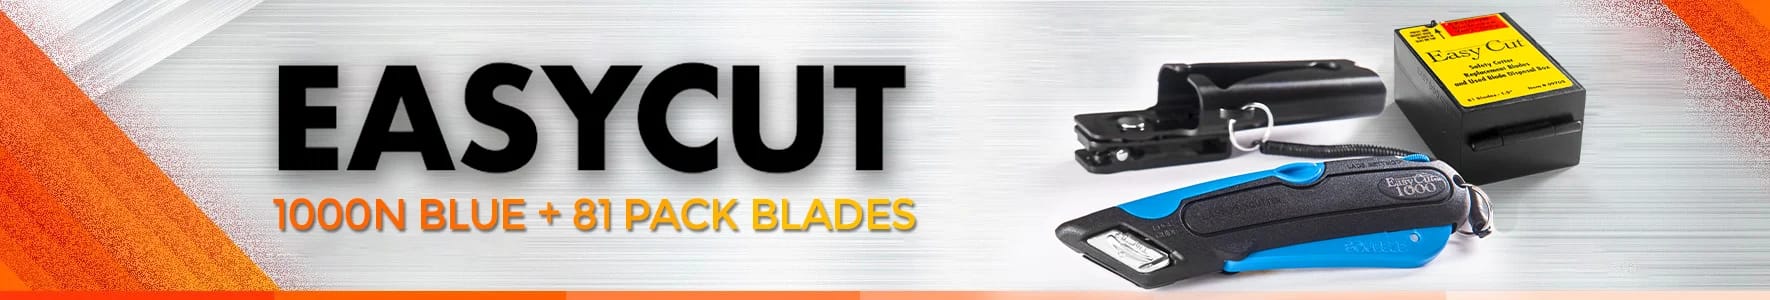 Easy Cut 1000N Blue + 81 Pack Blades - Easy Box Cutter